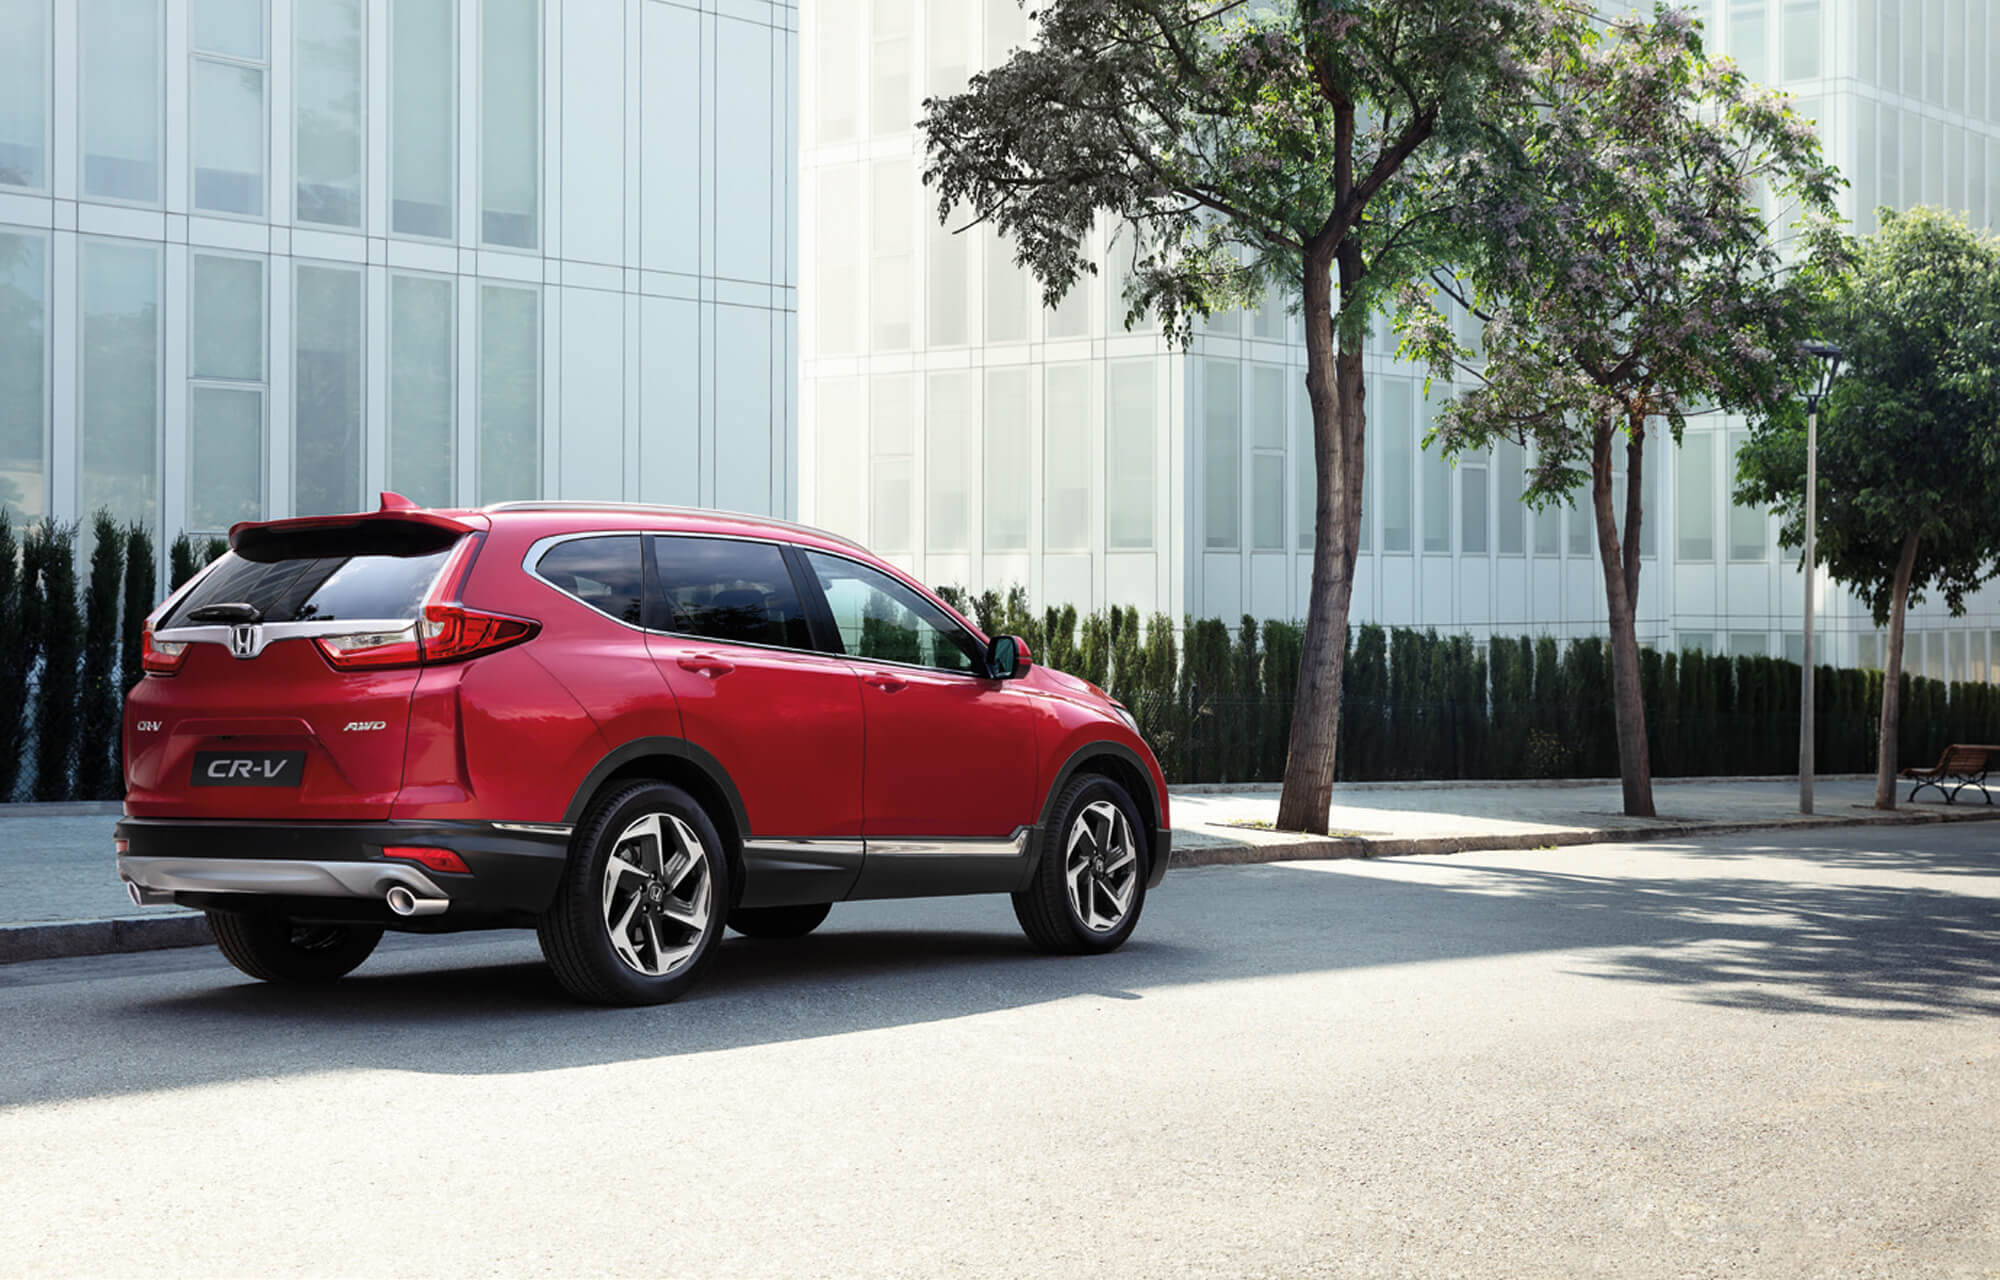 The all-new Honda CR-V